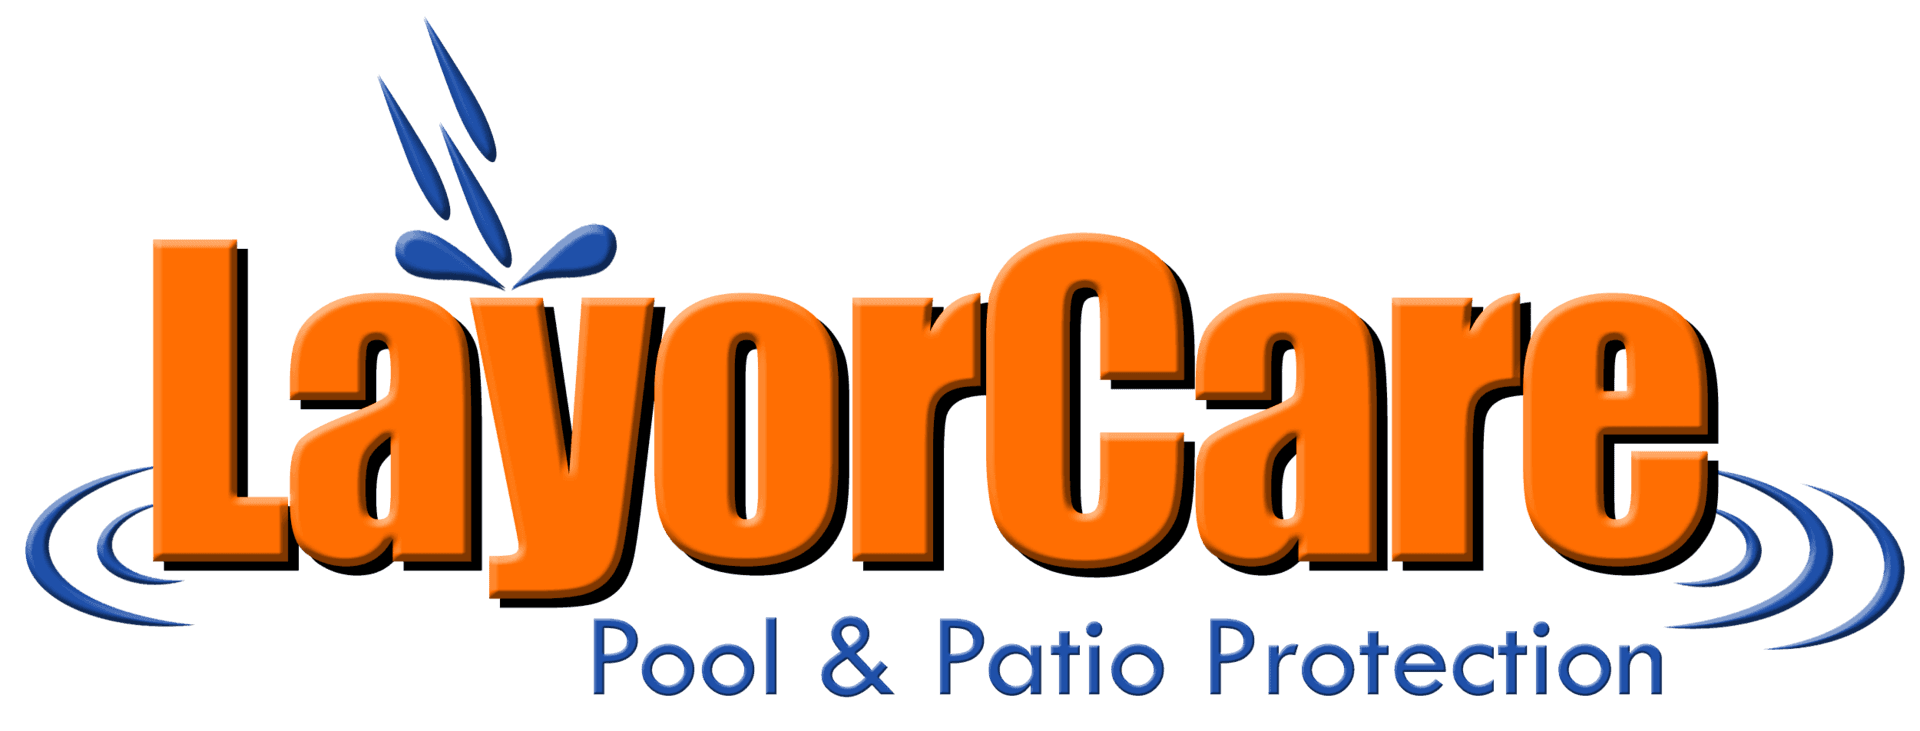 LayorCare Pool & Patio Protection